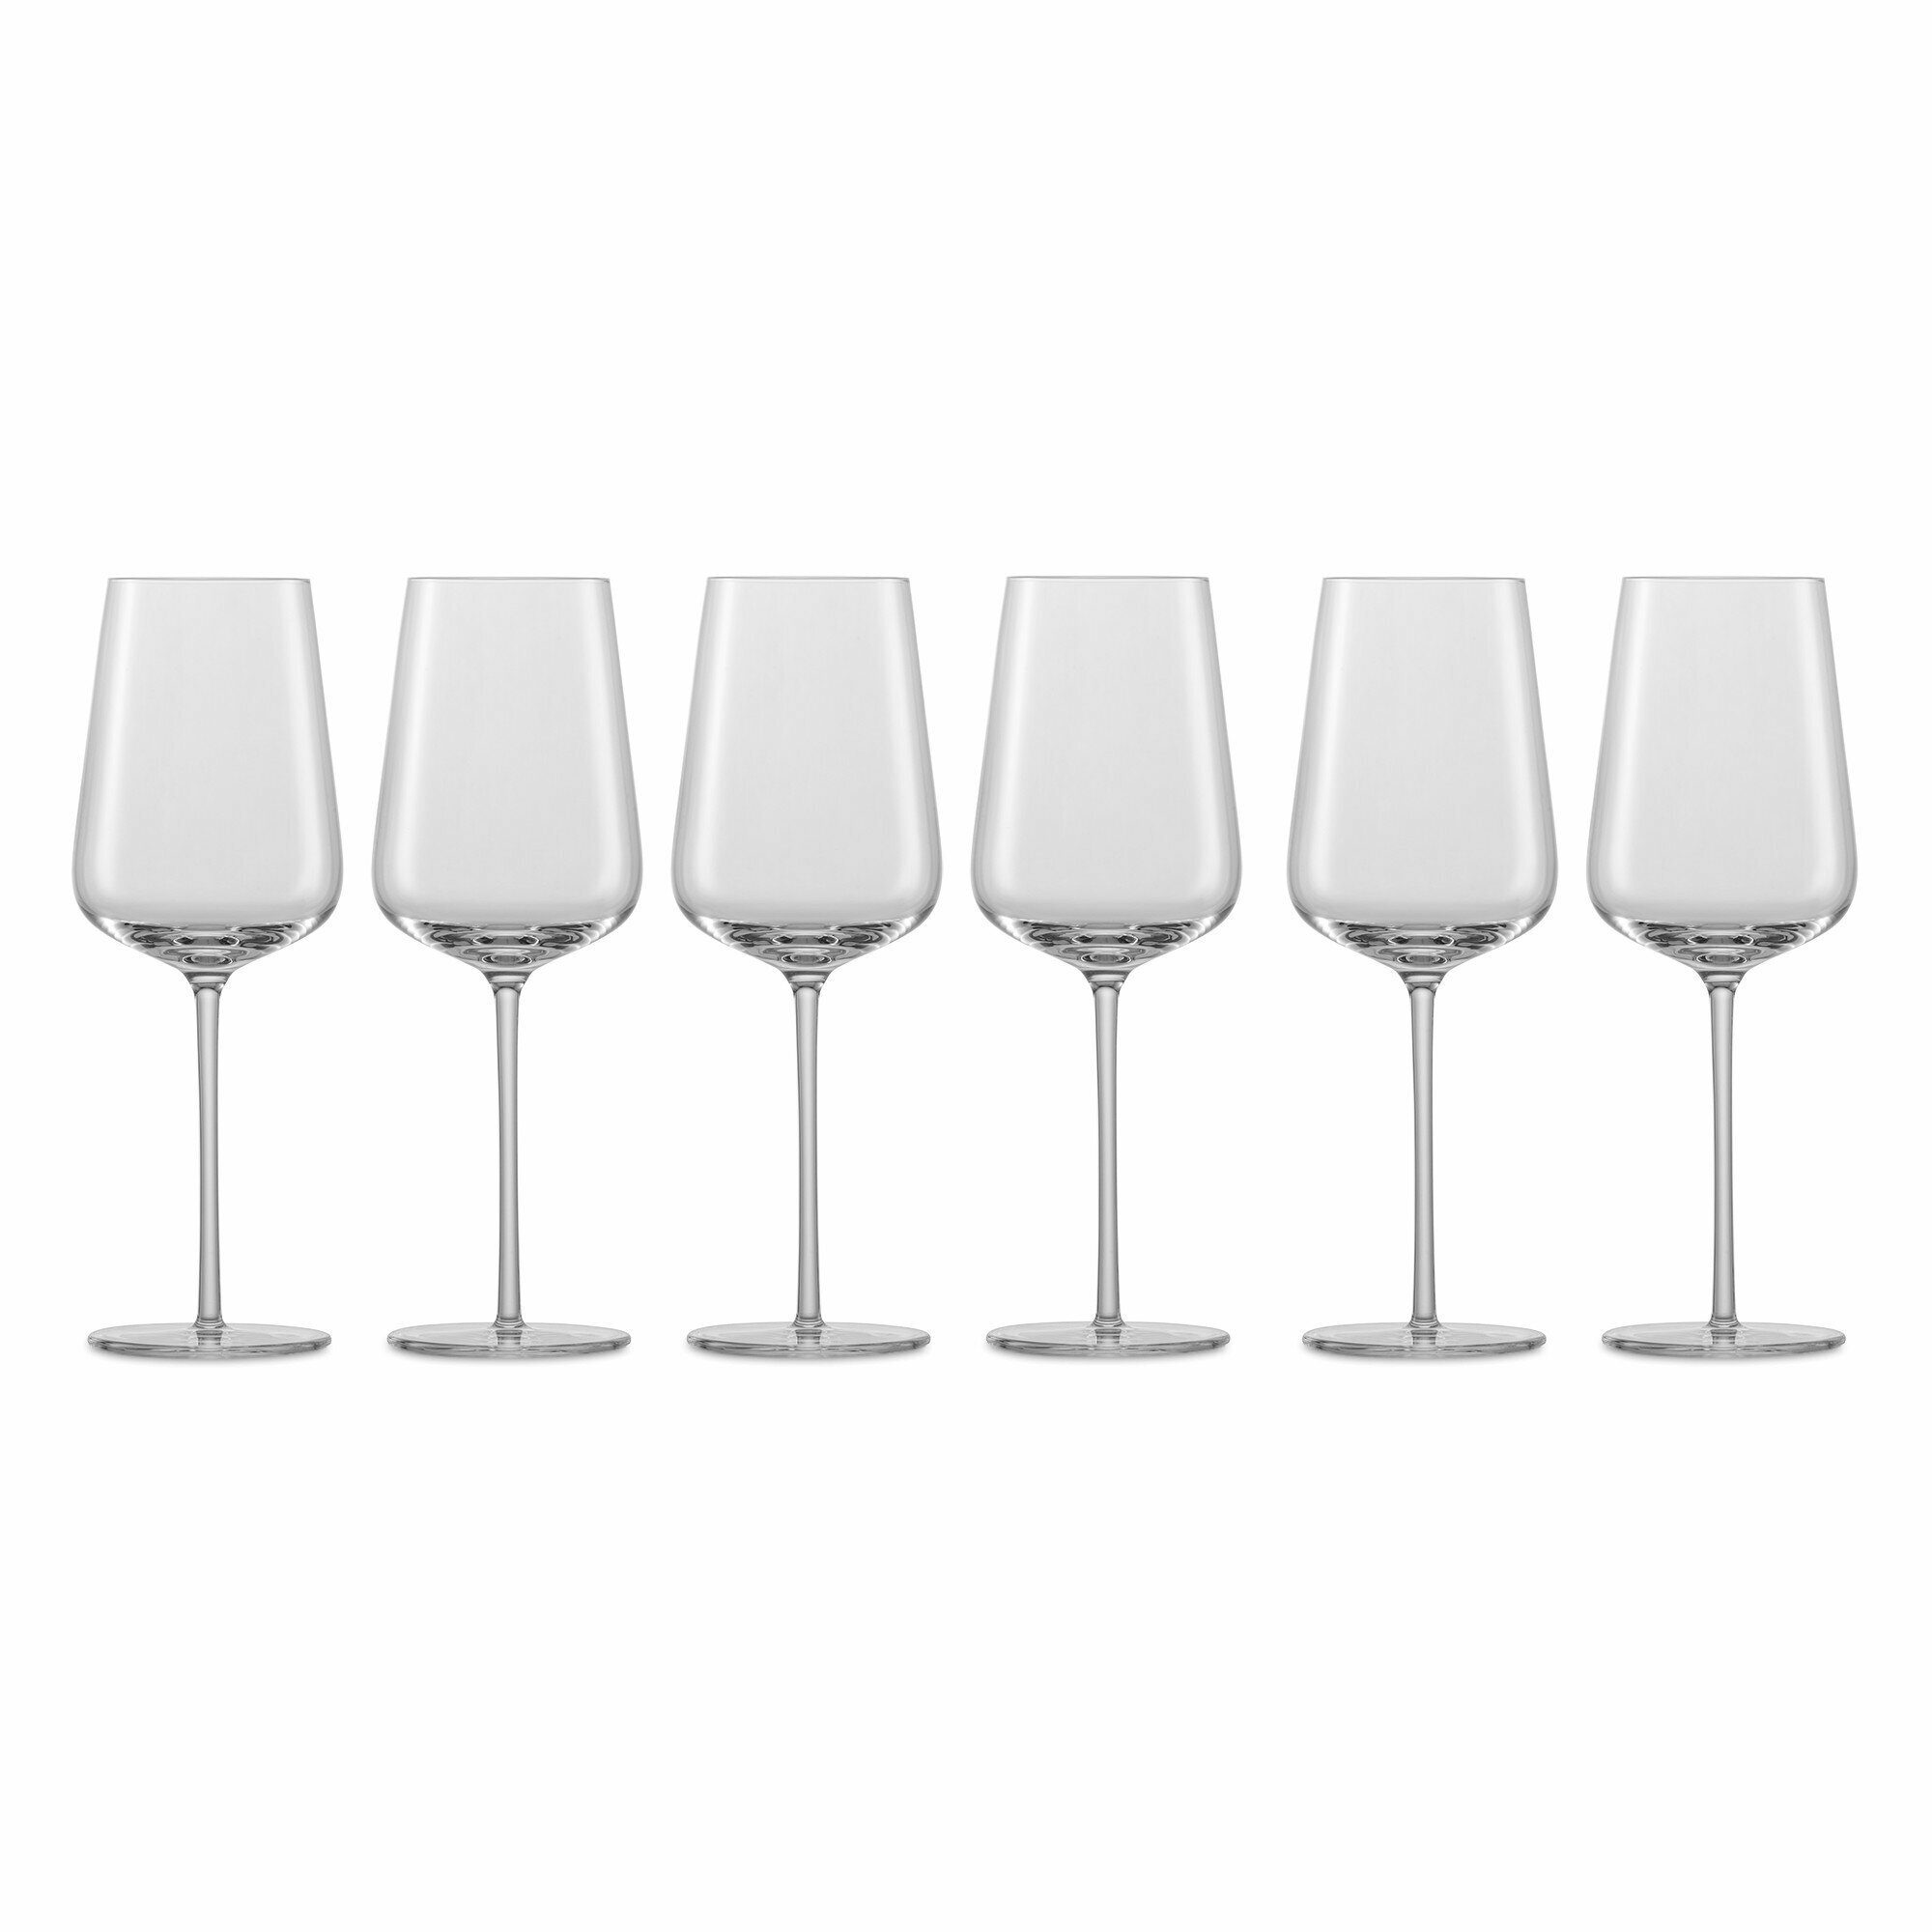 Набор бокалов для белого вина RIESLING, объем 406 мл, 6 шт. 121404 Verbelle